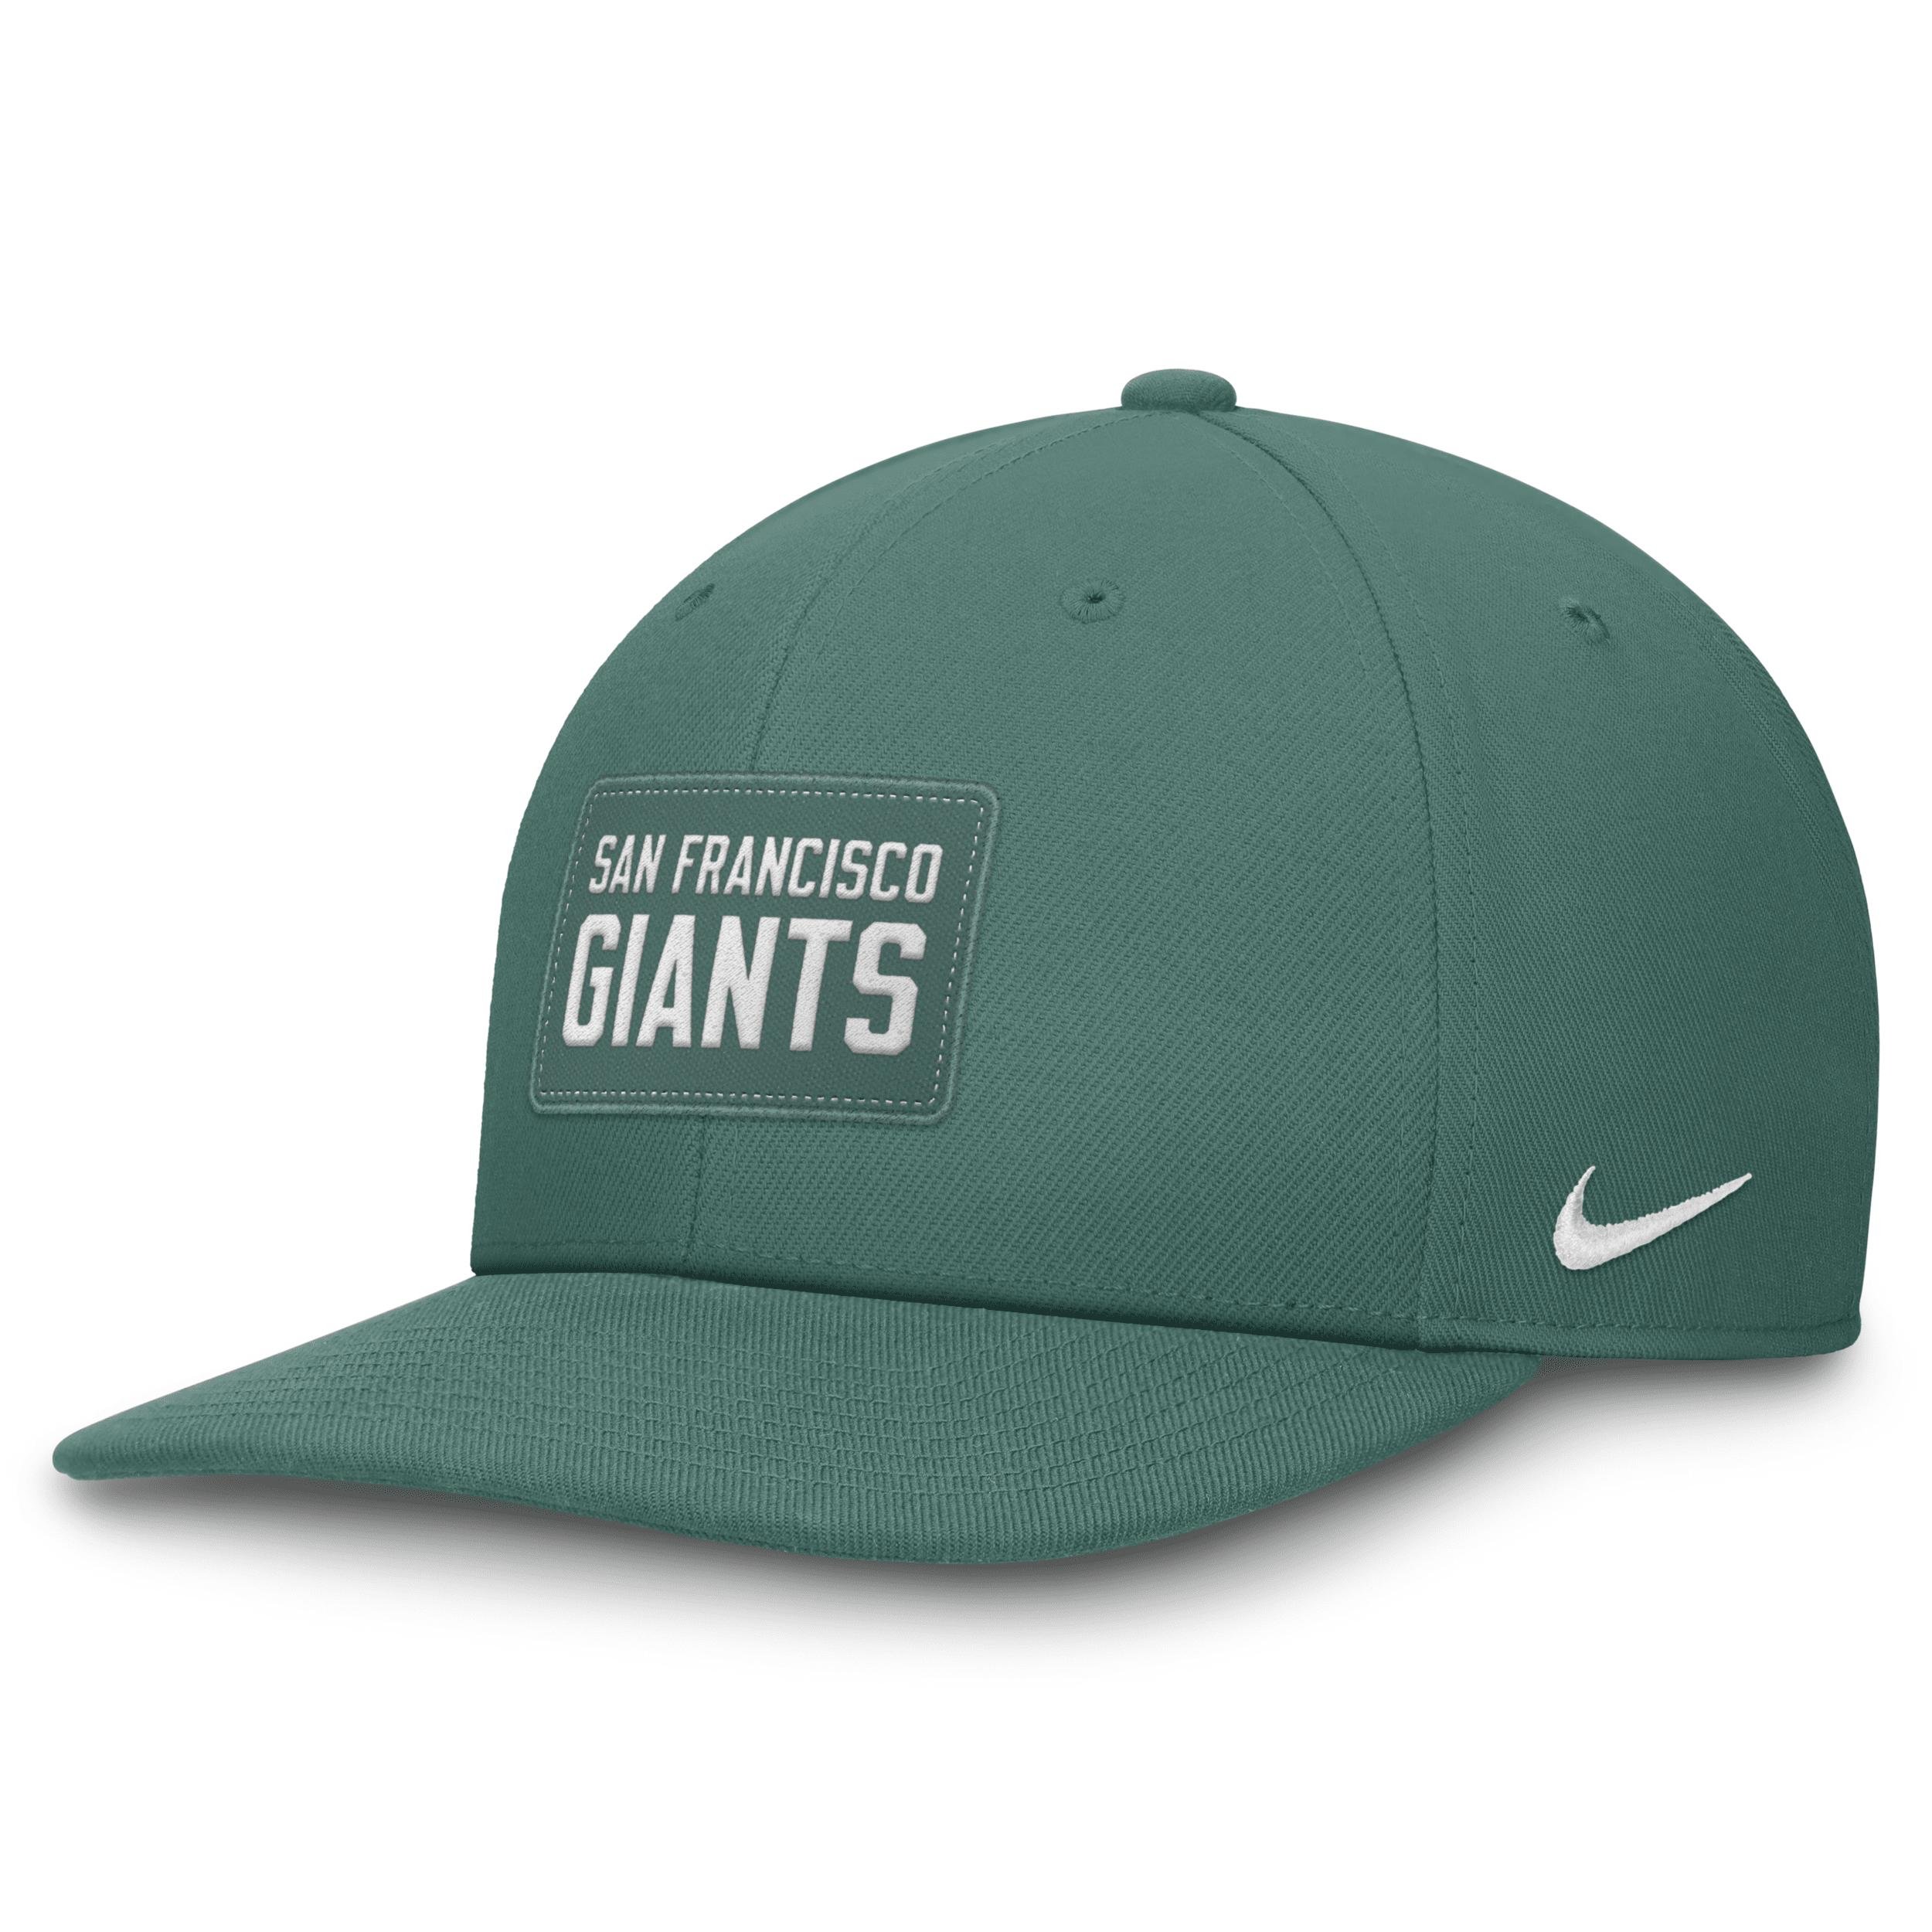 San Francisco Giants Bicoastal Pro Nike Unisex Dri-FIT MLB Adjustable Hat by NIKE